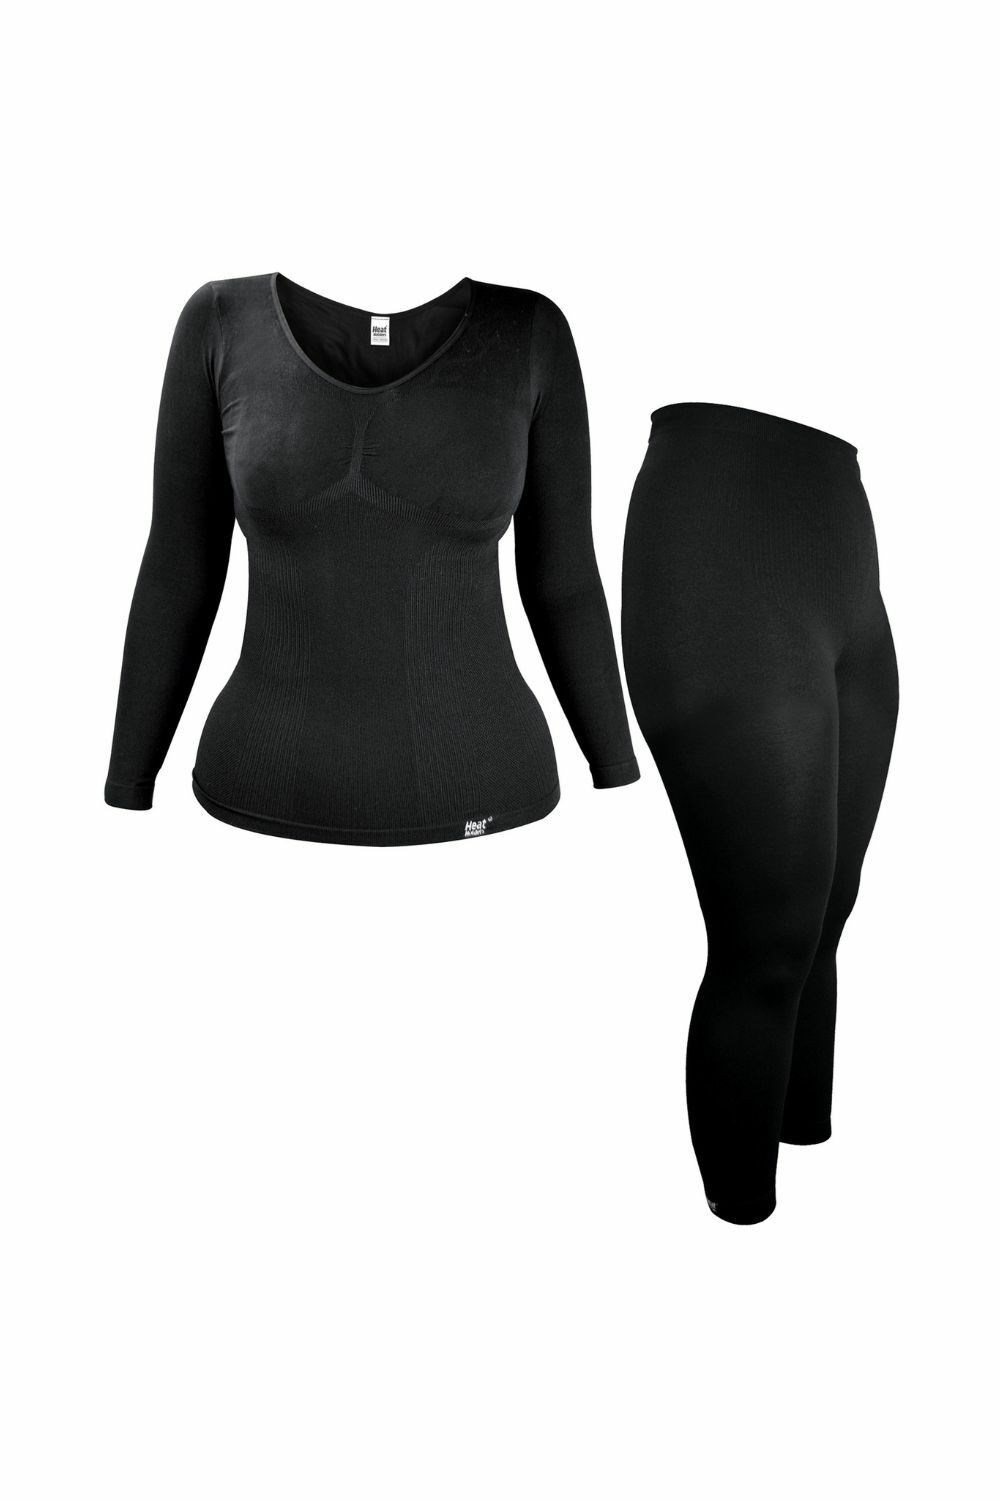 Womens Thermal Long Sleeve Top & Long Janes Set -